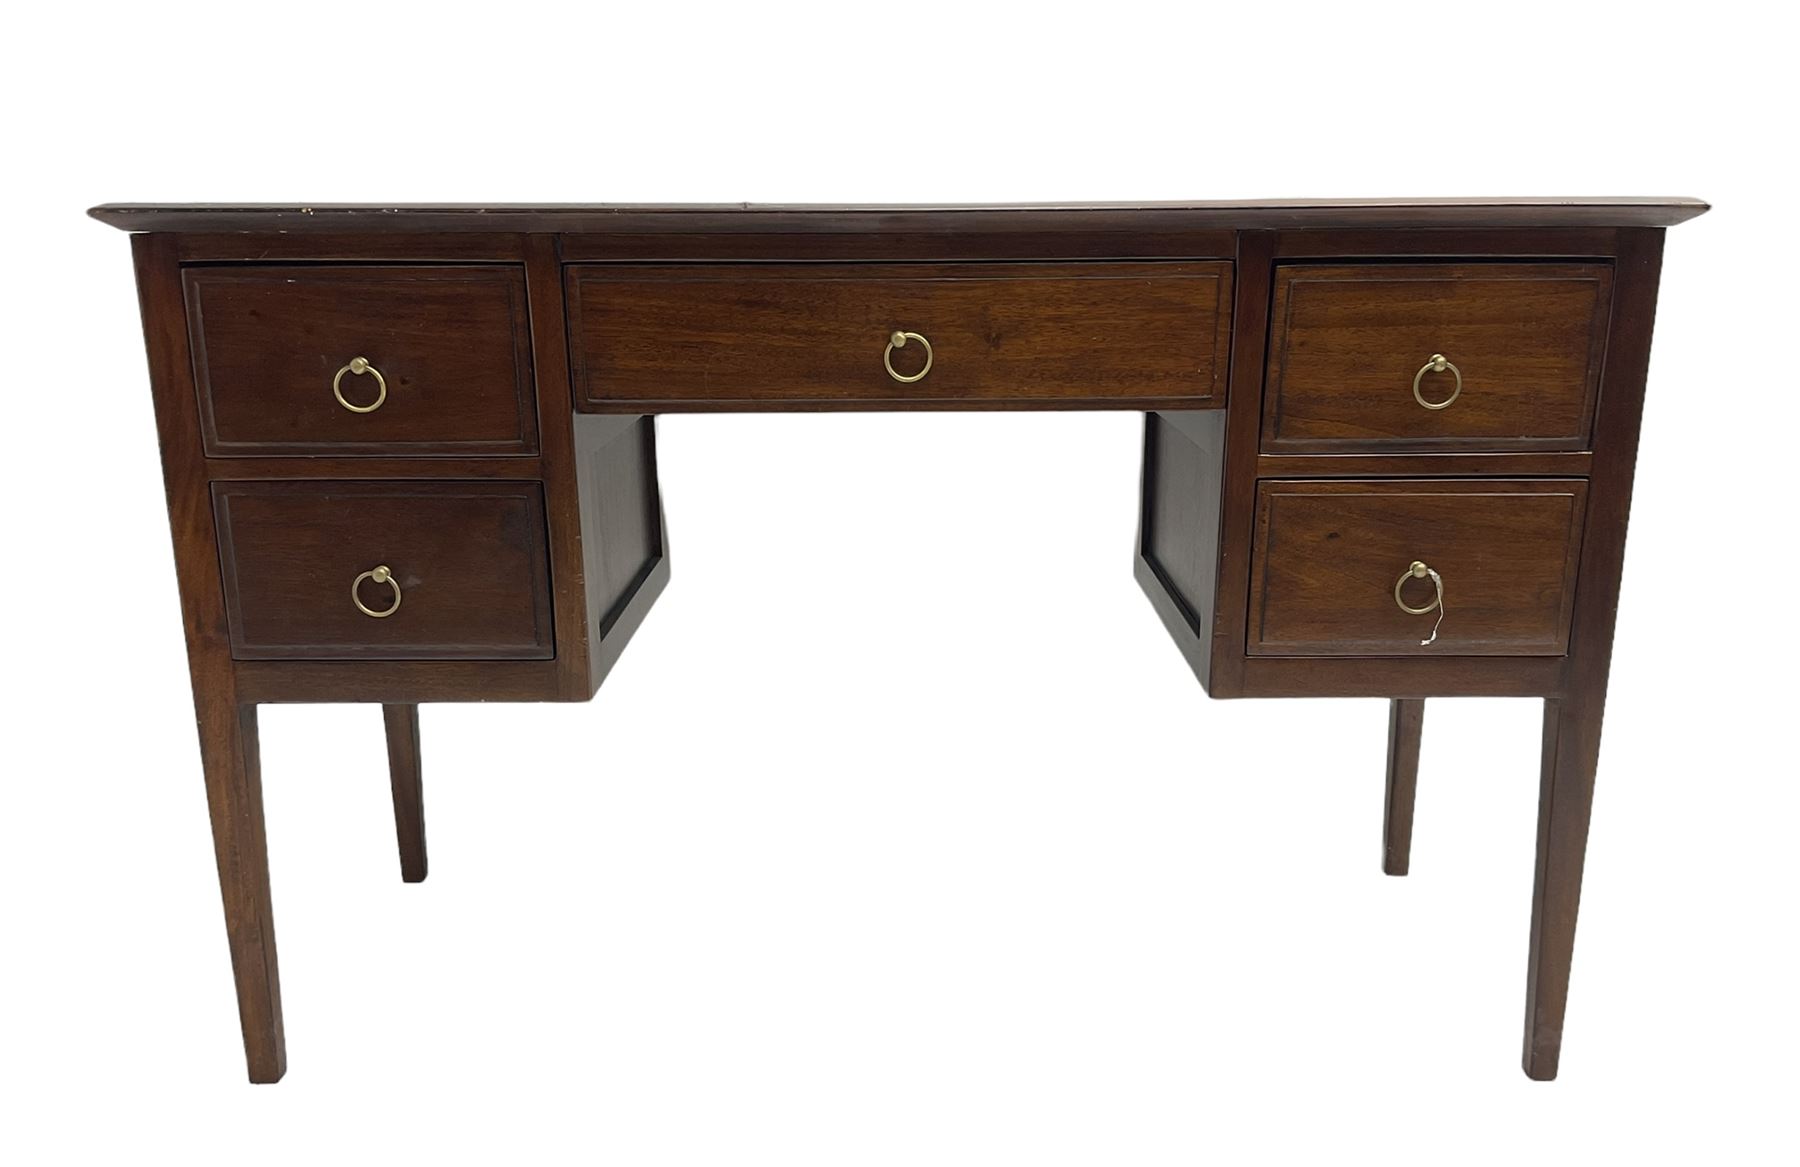 Hardwood kneehole dressing table or desk